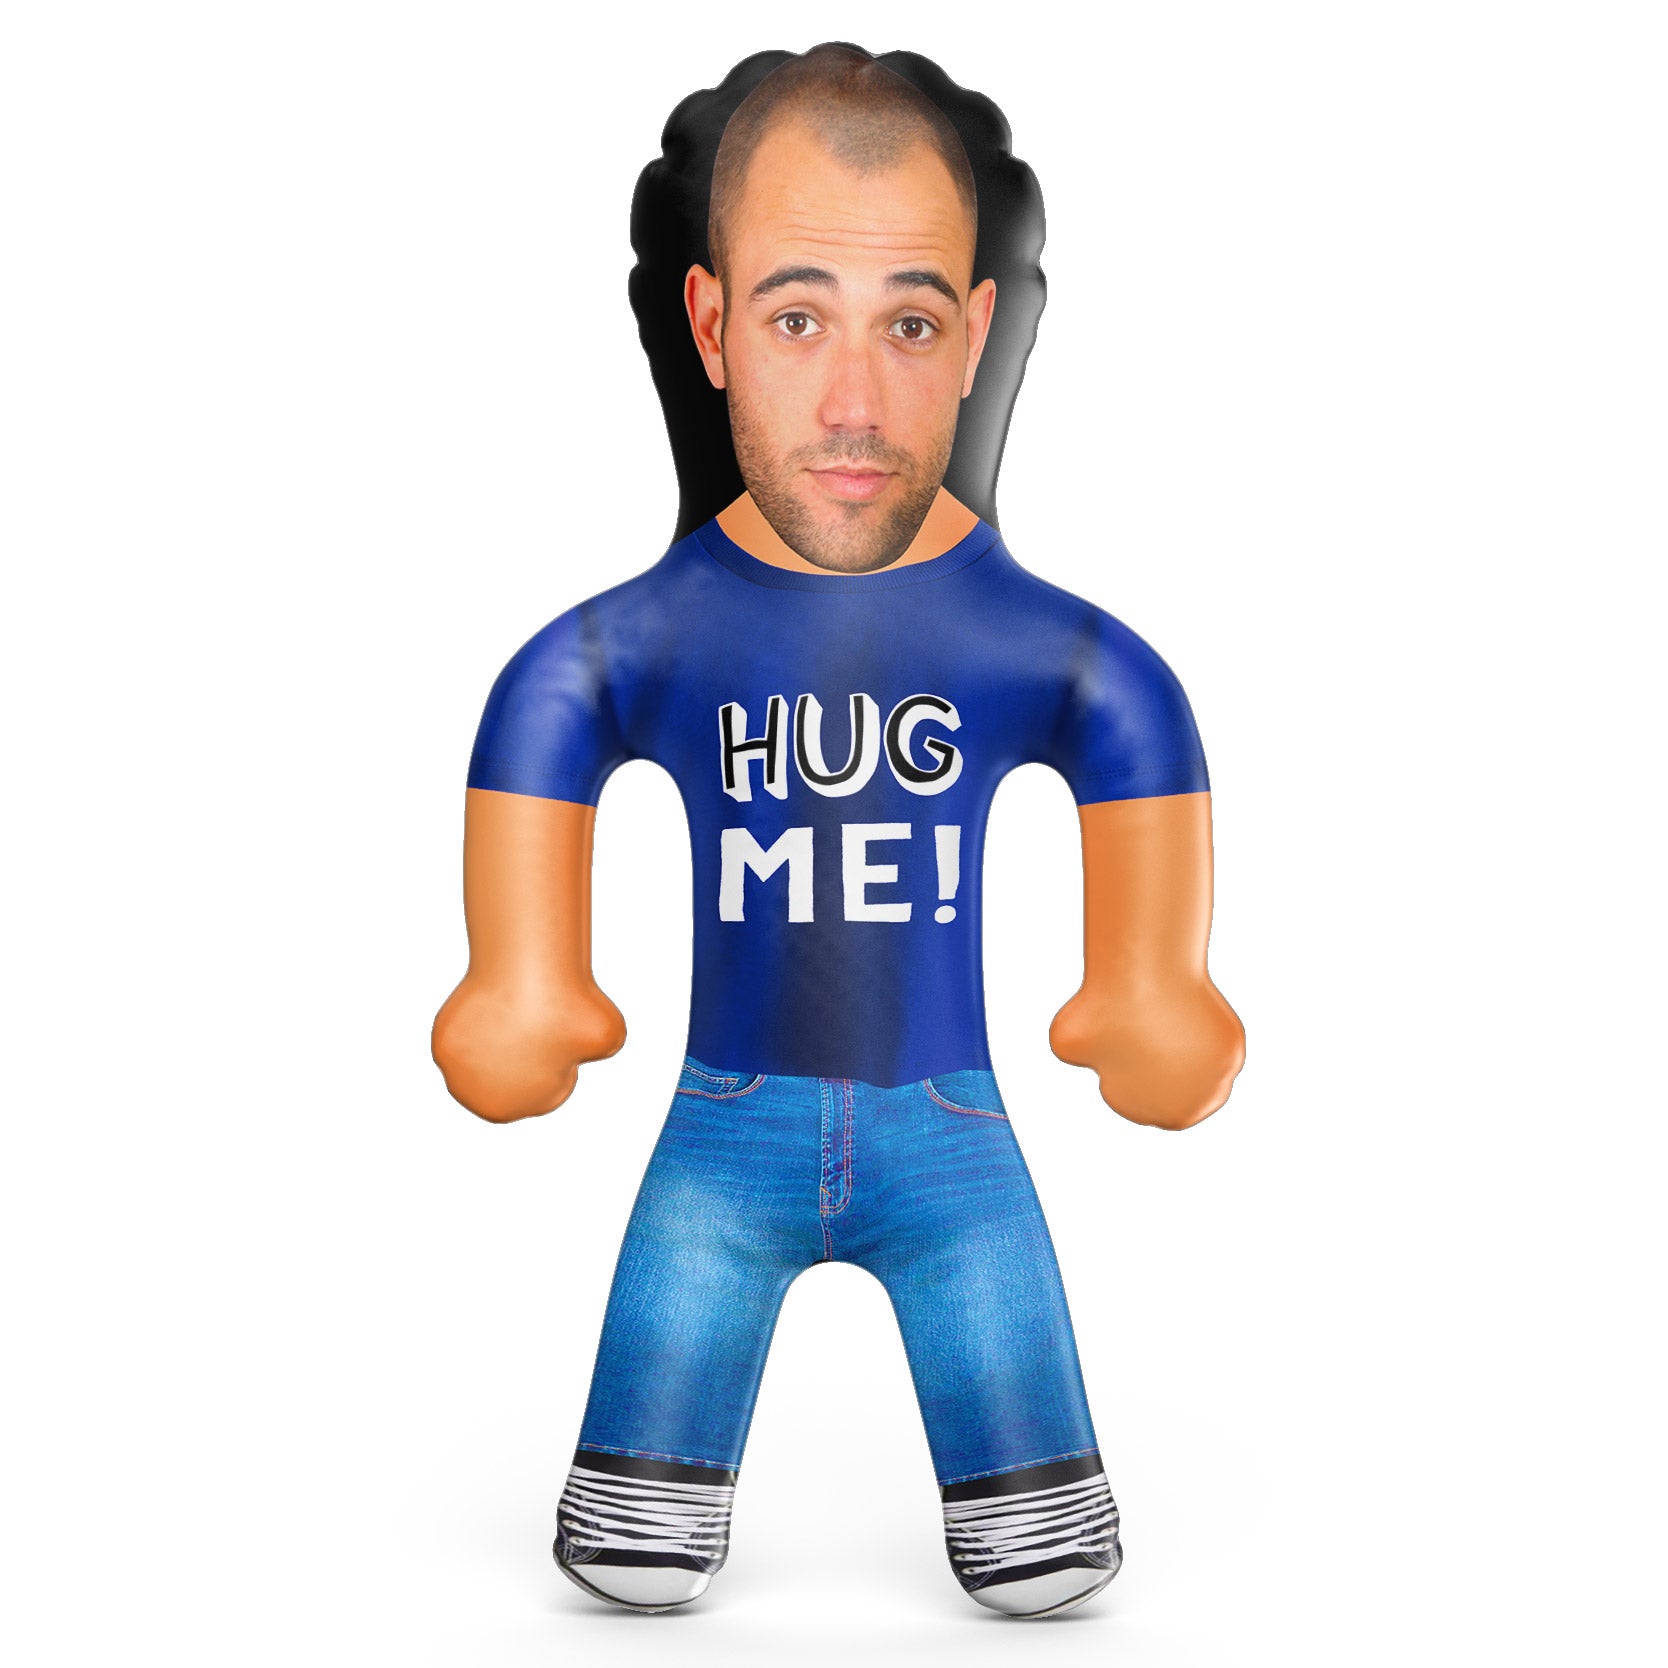 Hug Me Inflatable Doll - Custom Blow Up Doll